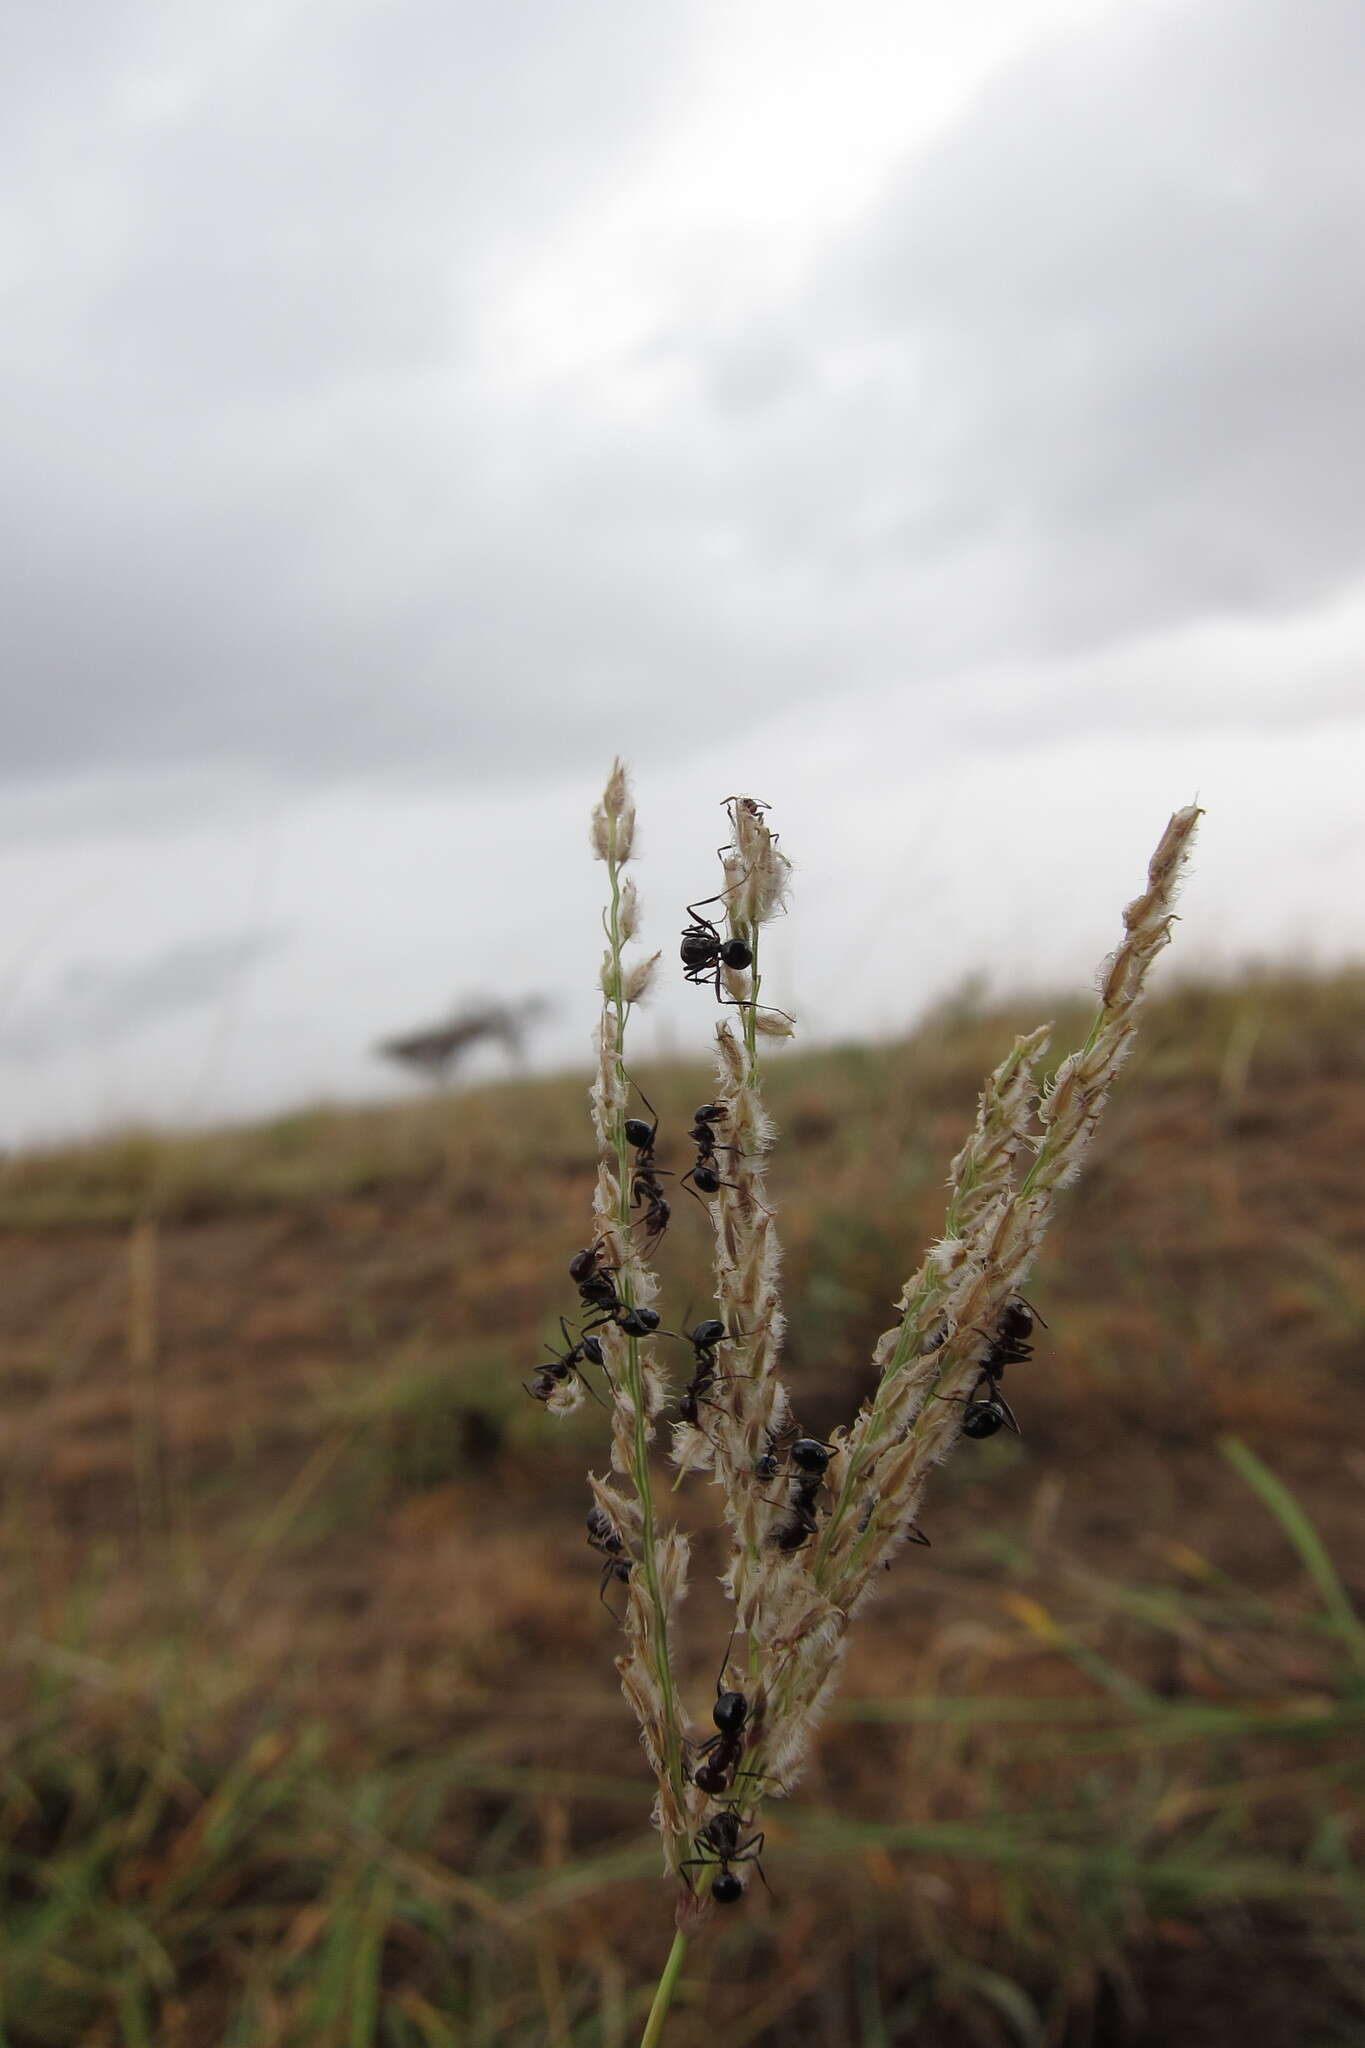 Image of Madagascar crabgrass